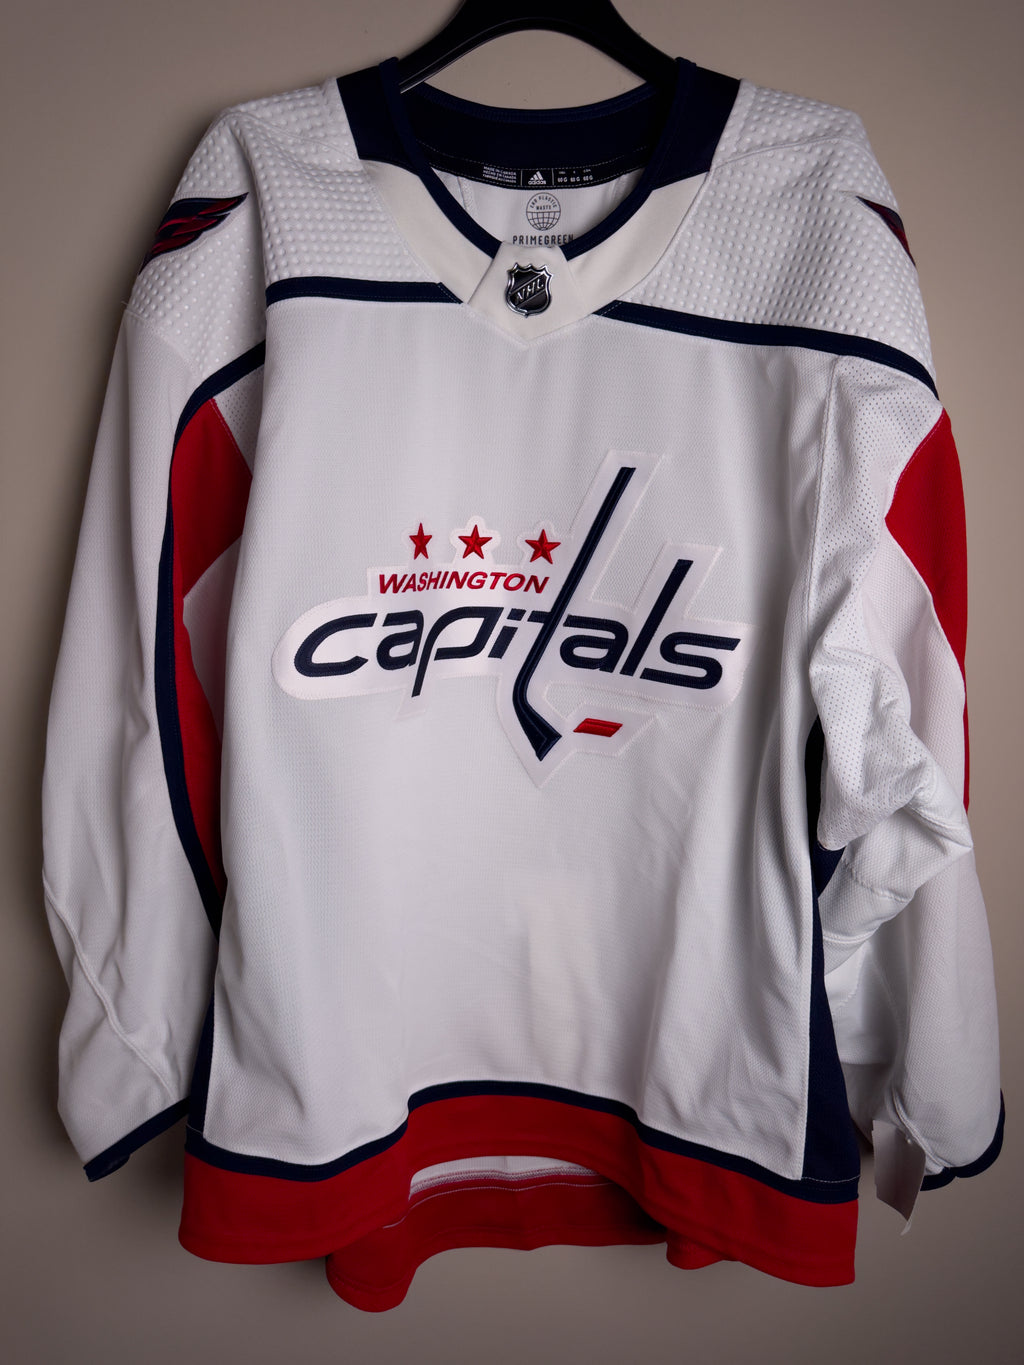 Washington Capitals NHL Adidas MiC Team Issued Away Jersey Size 60G (Goalie Cut)